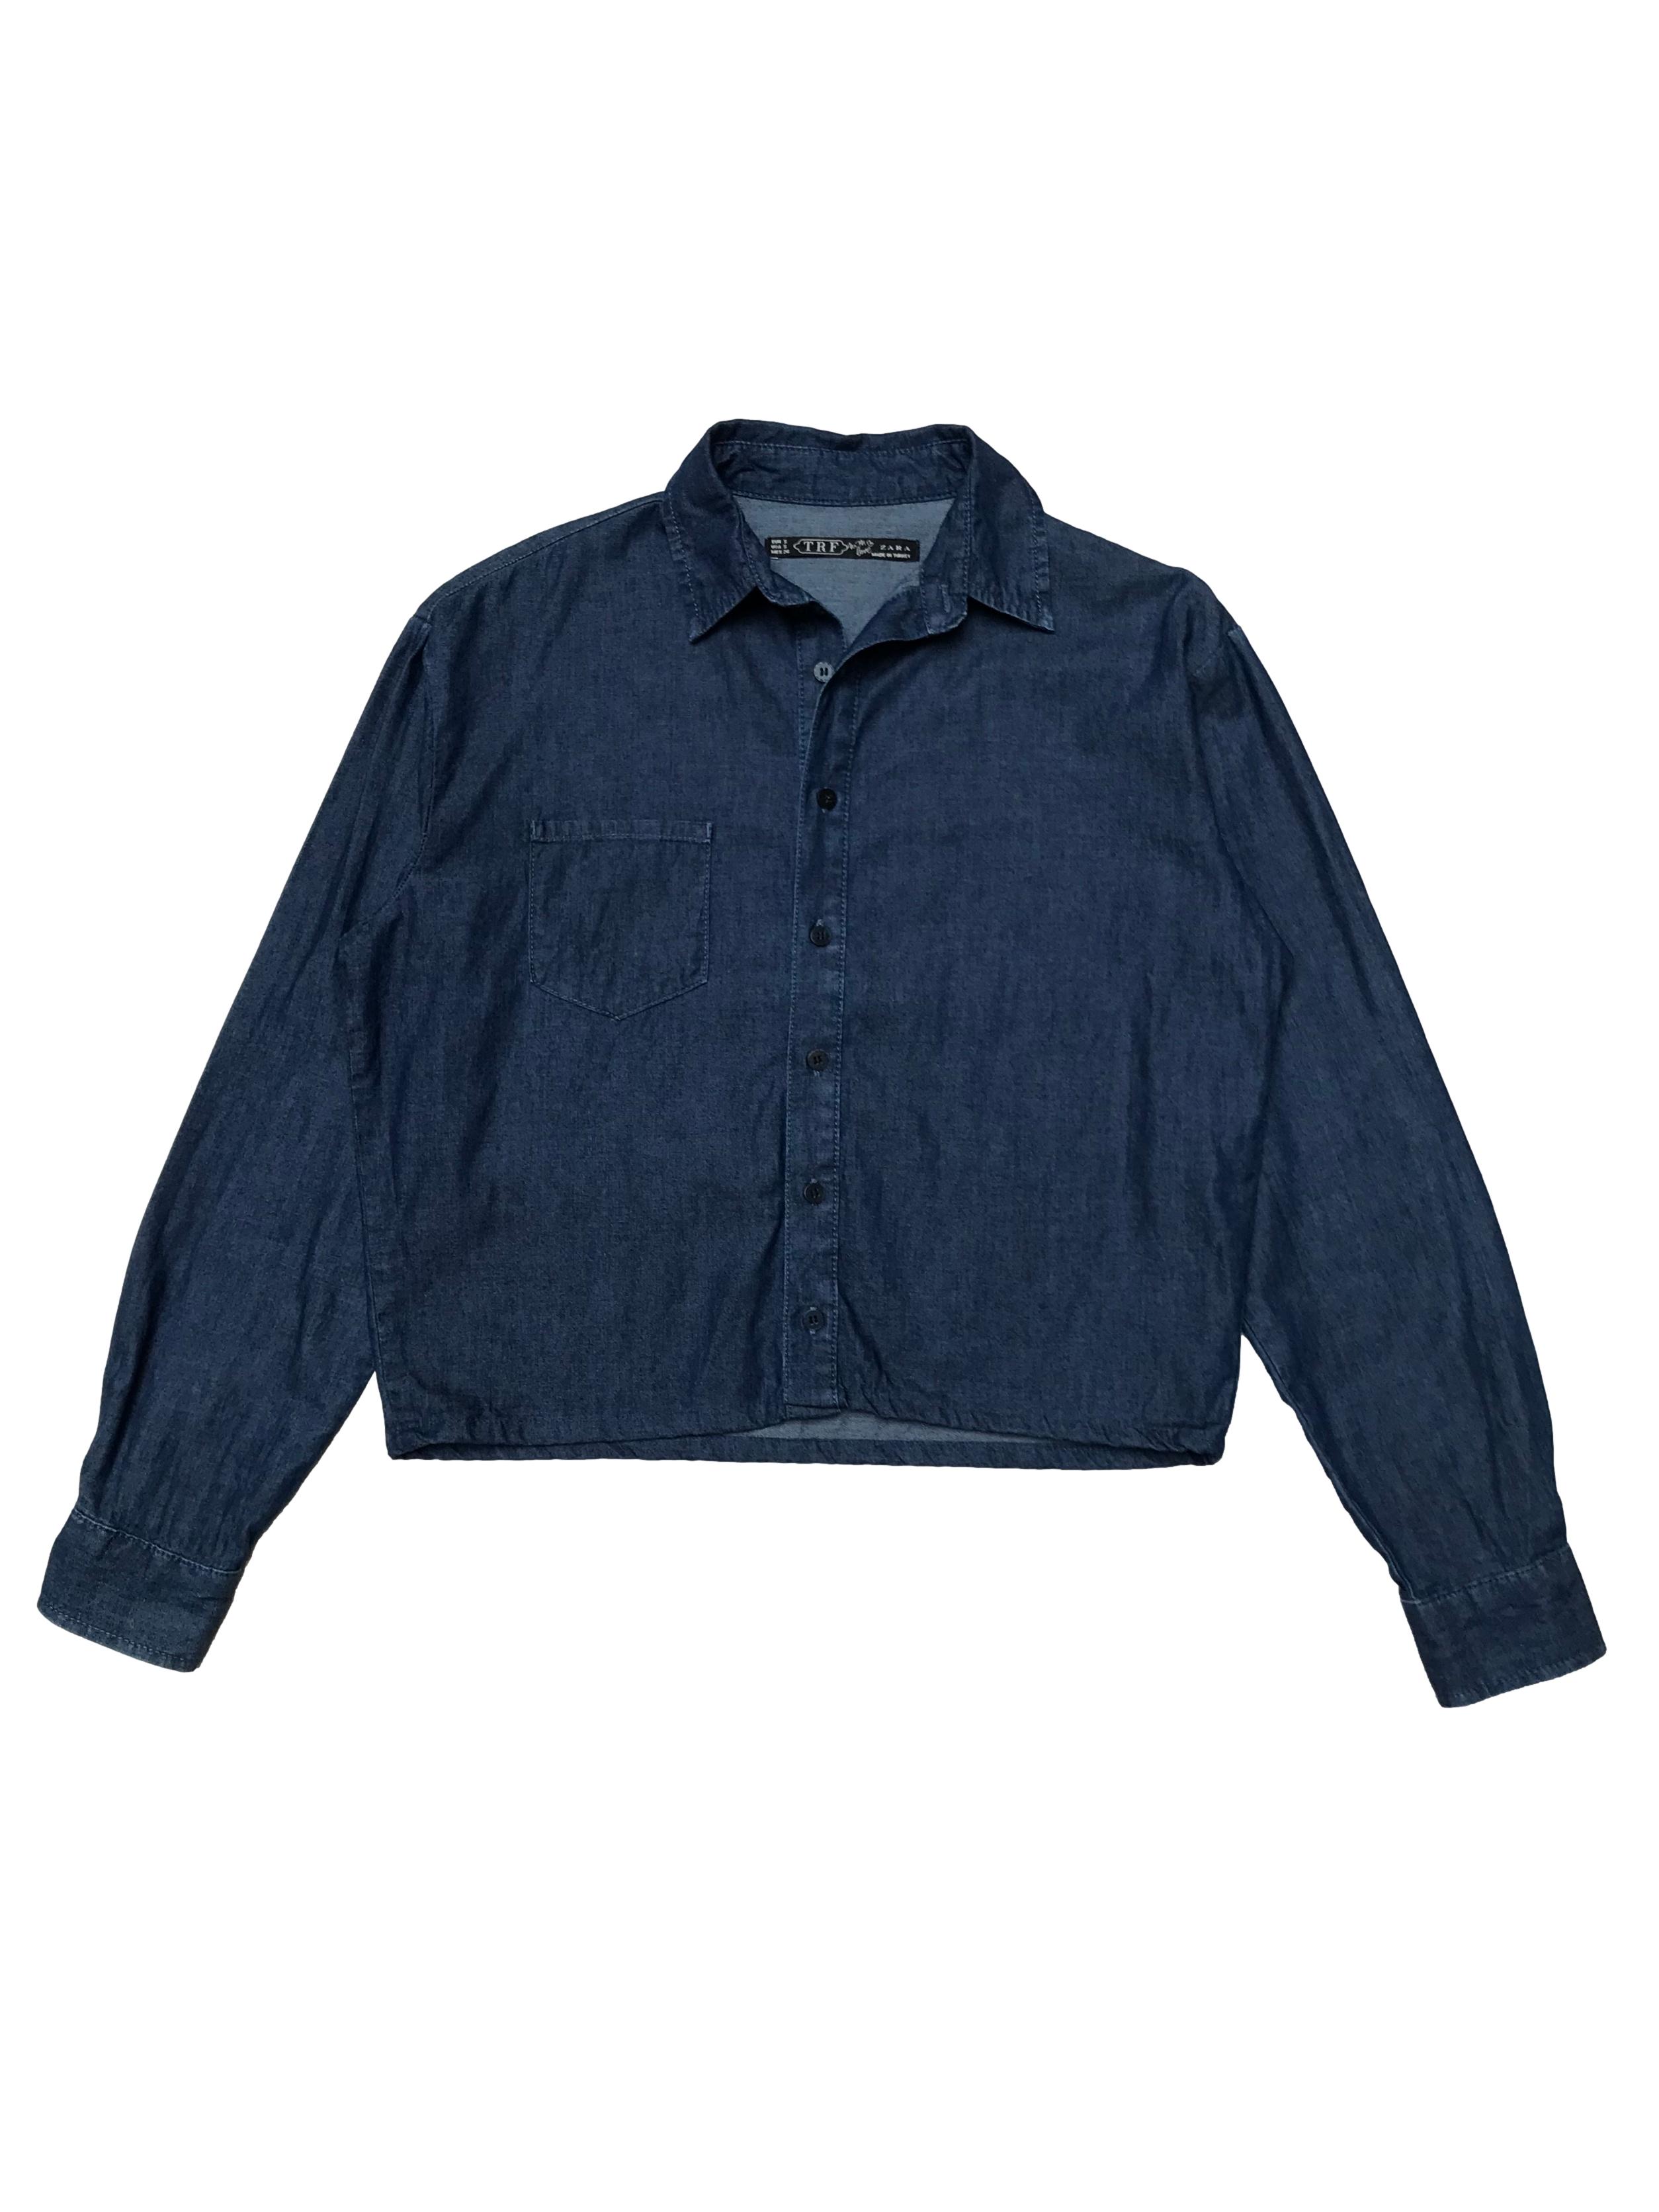 Blusa Zara oversize  de jean suave, modelo camisero con fila de botones. Ancho 110cm Largo 50cm. Precio original S/ 149